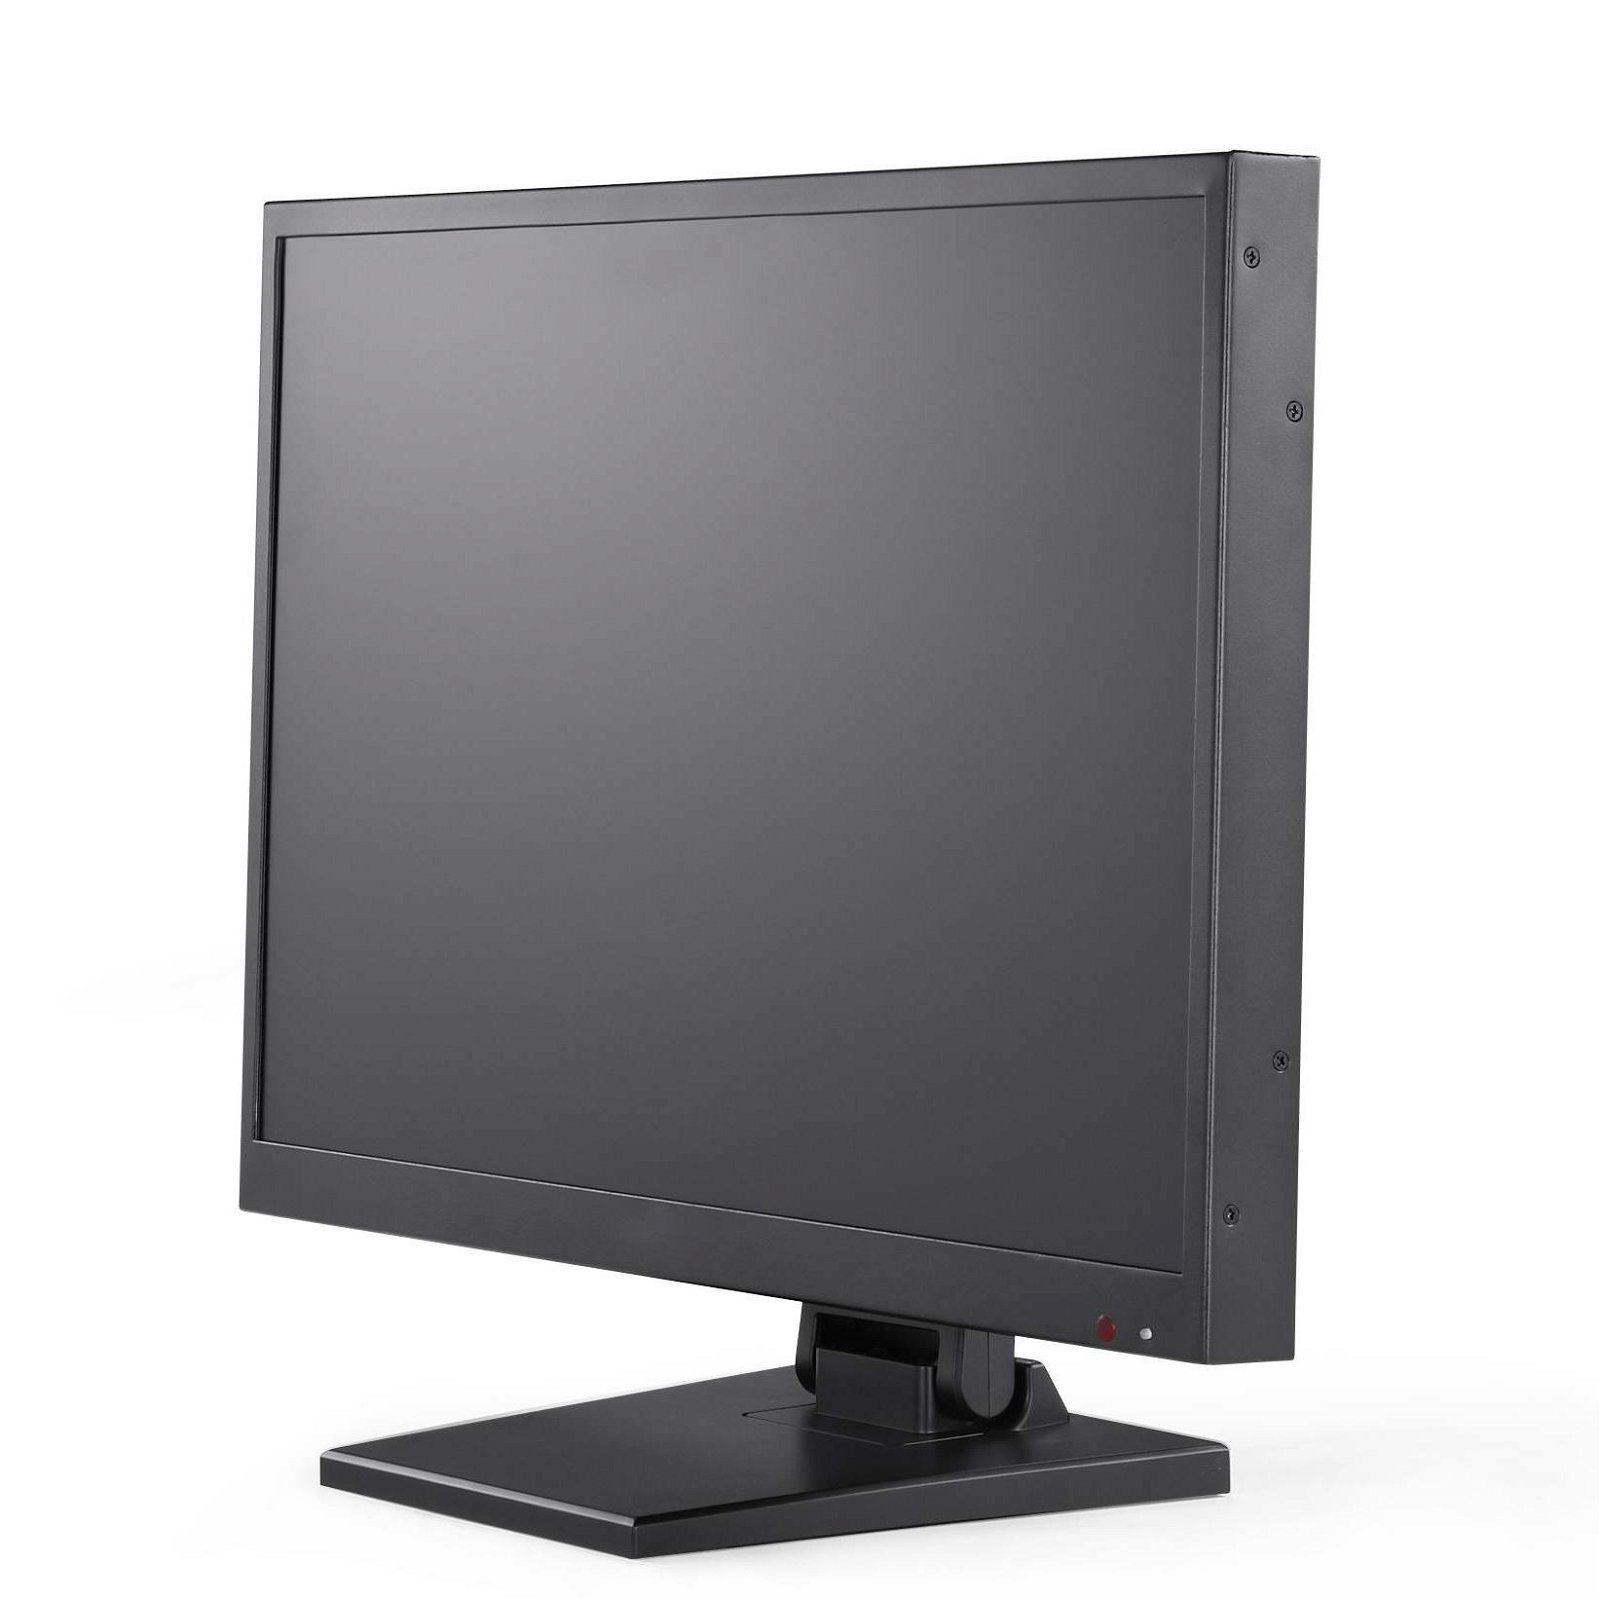 Professional 19 inch CCTV LCD monitor 2